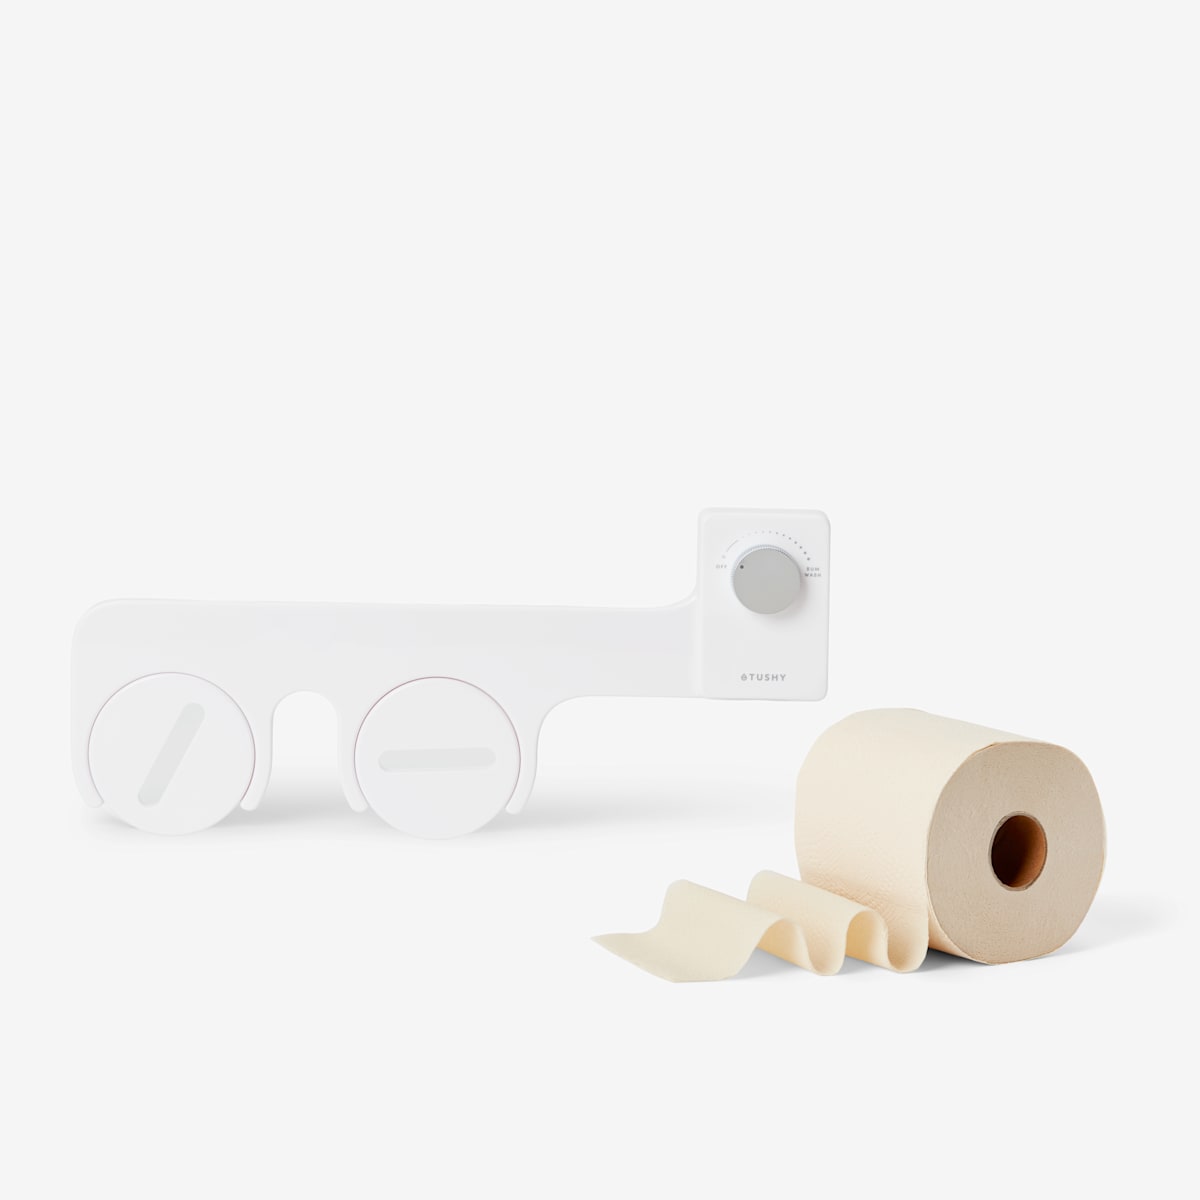 Classic White 100% bamboo paper towels – Betterway